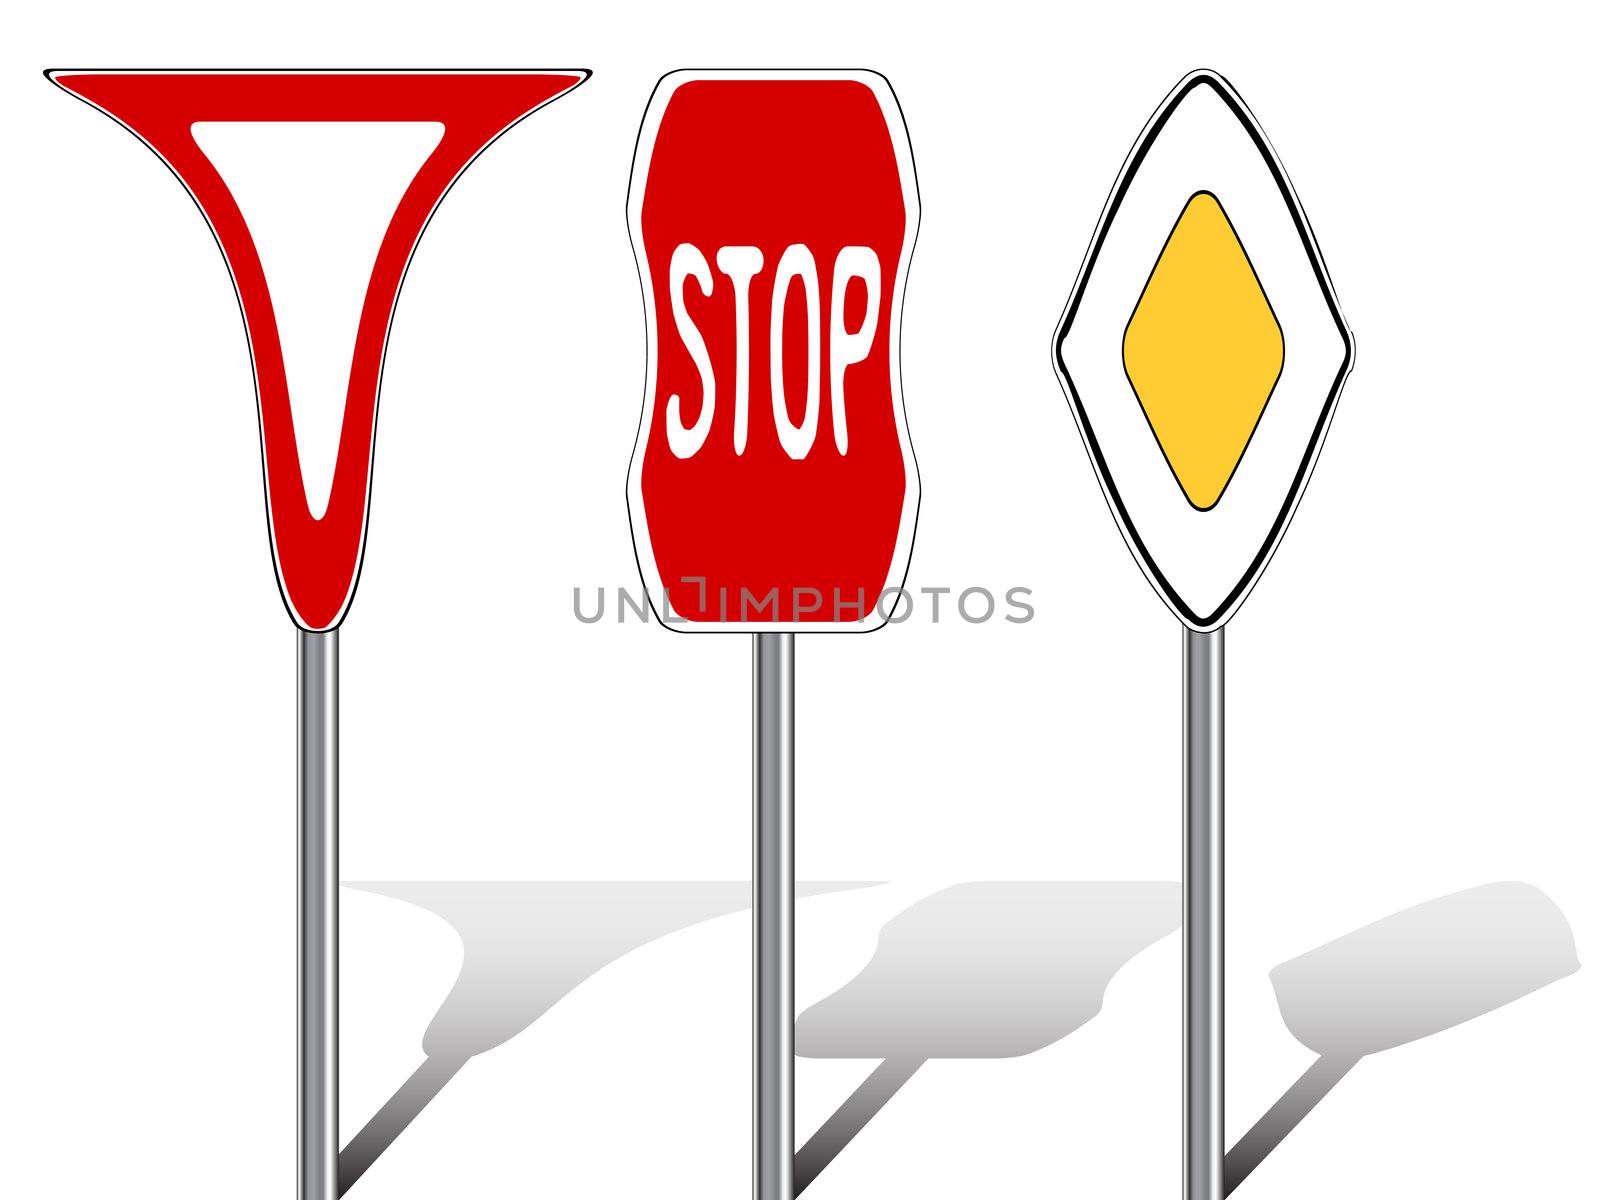 stylized traffic signs by robertosch